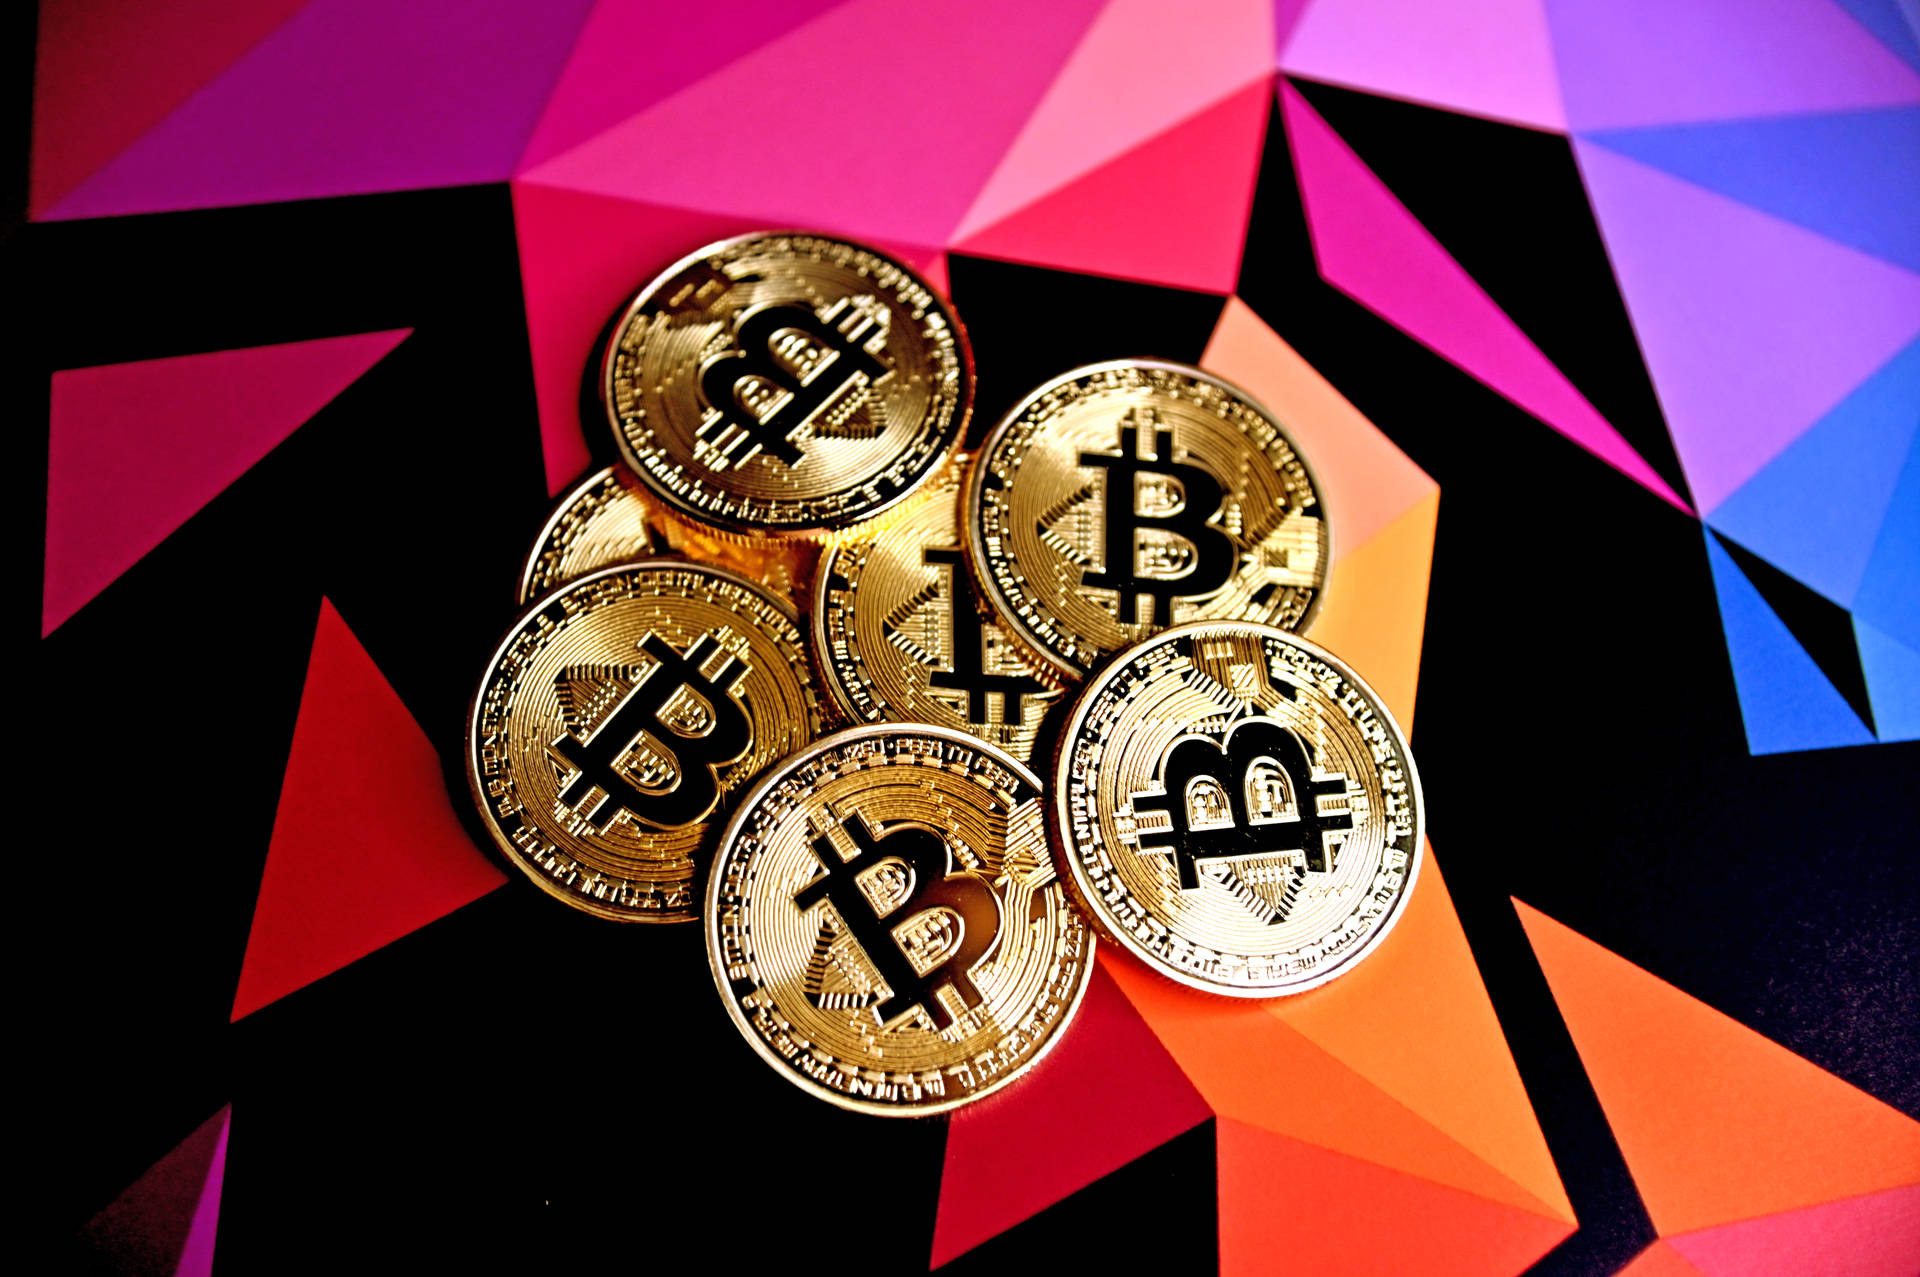 Colorful Geometric Art Bitcoins